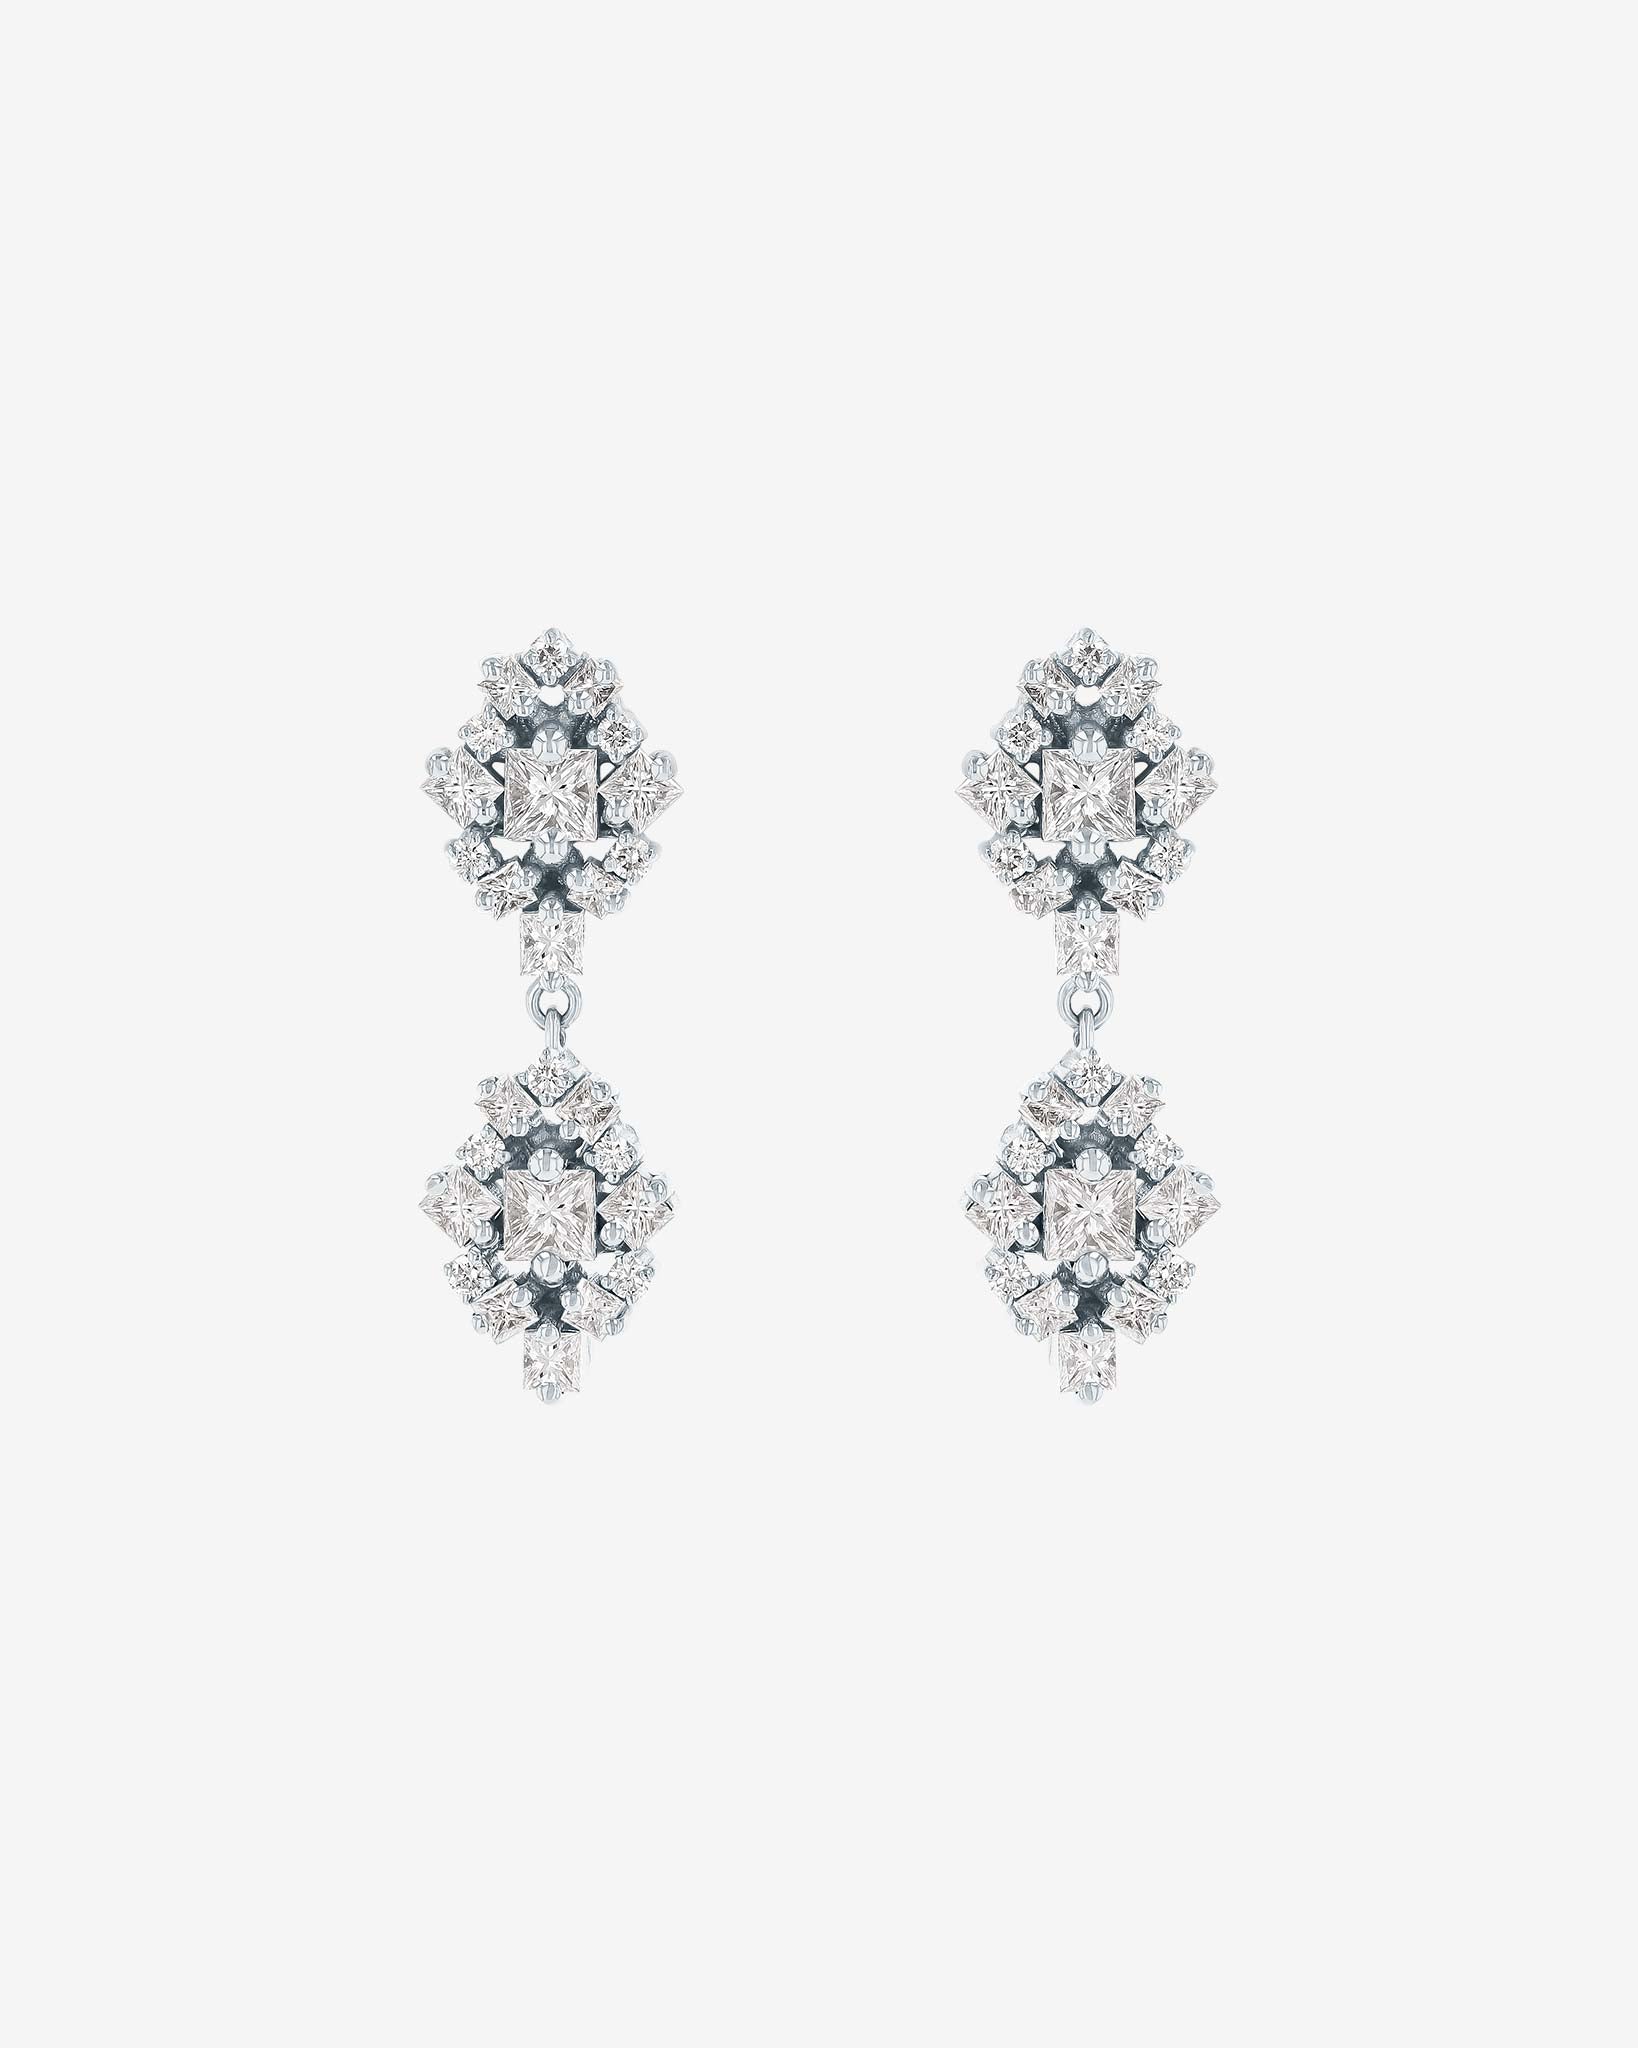 Suzanne Kalan La Fantaisie Double Star Diamond Drop Earrings 18k white gold